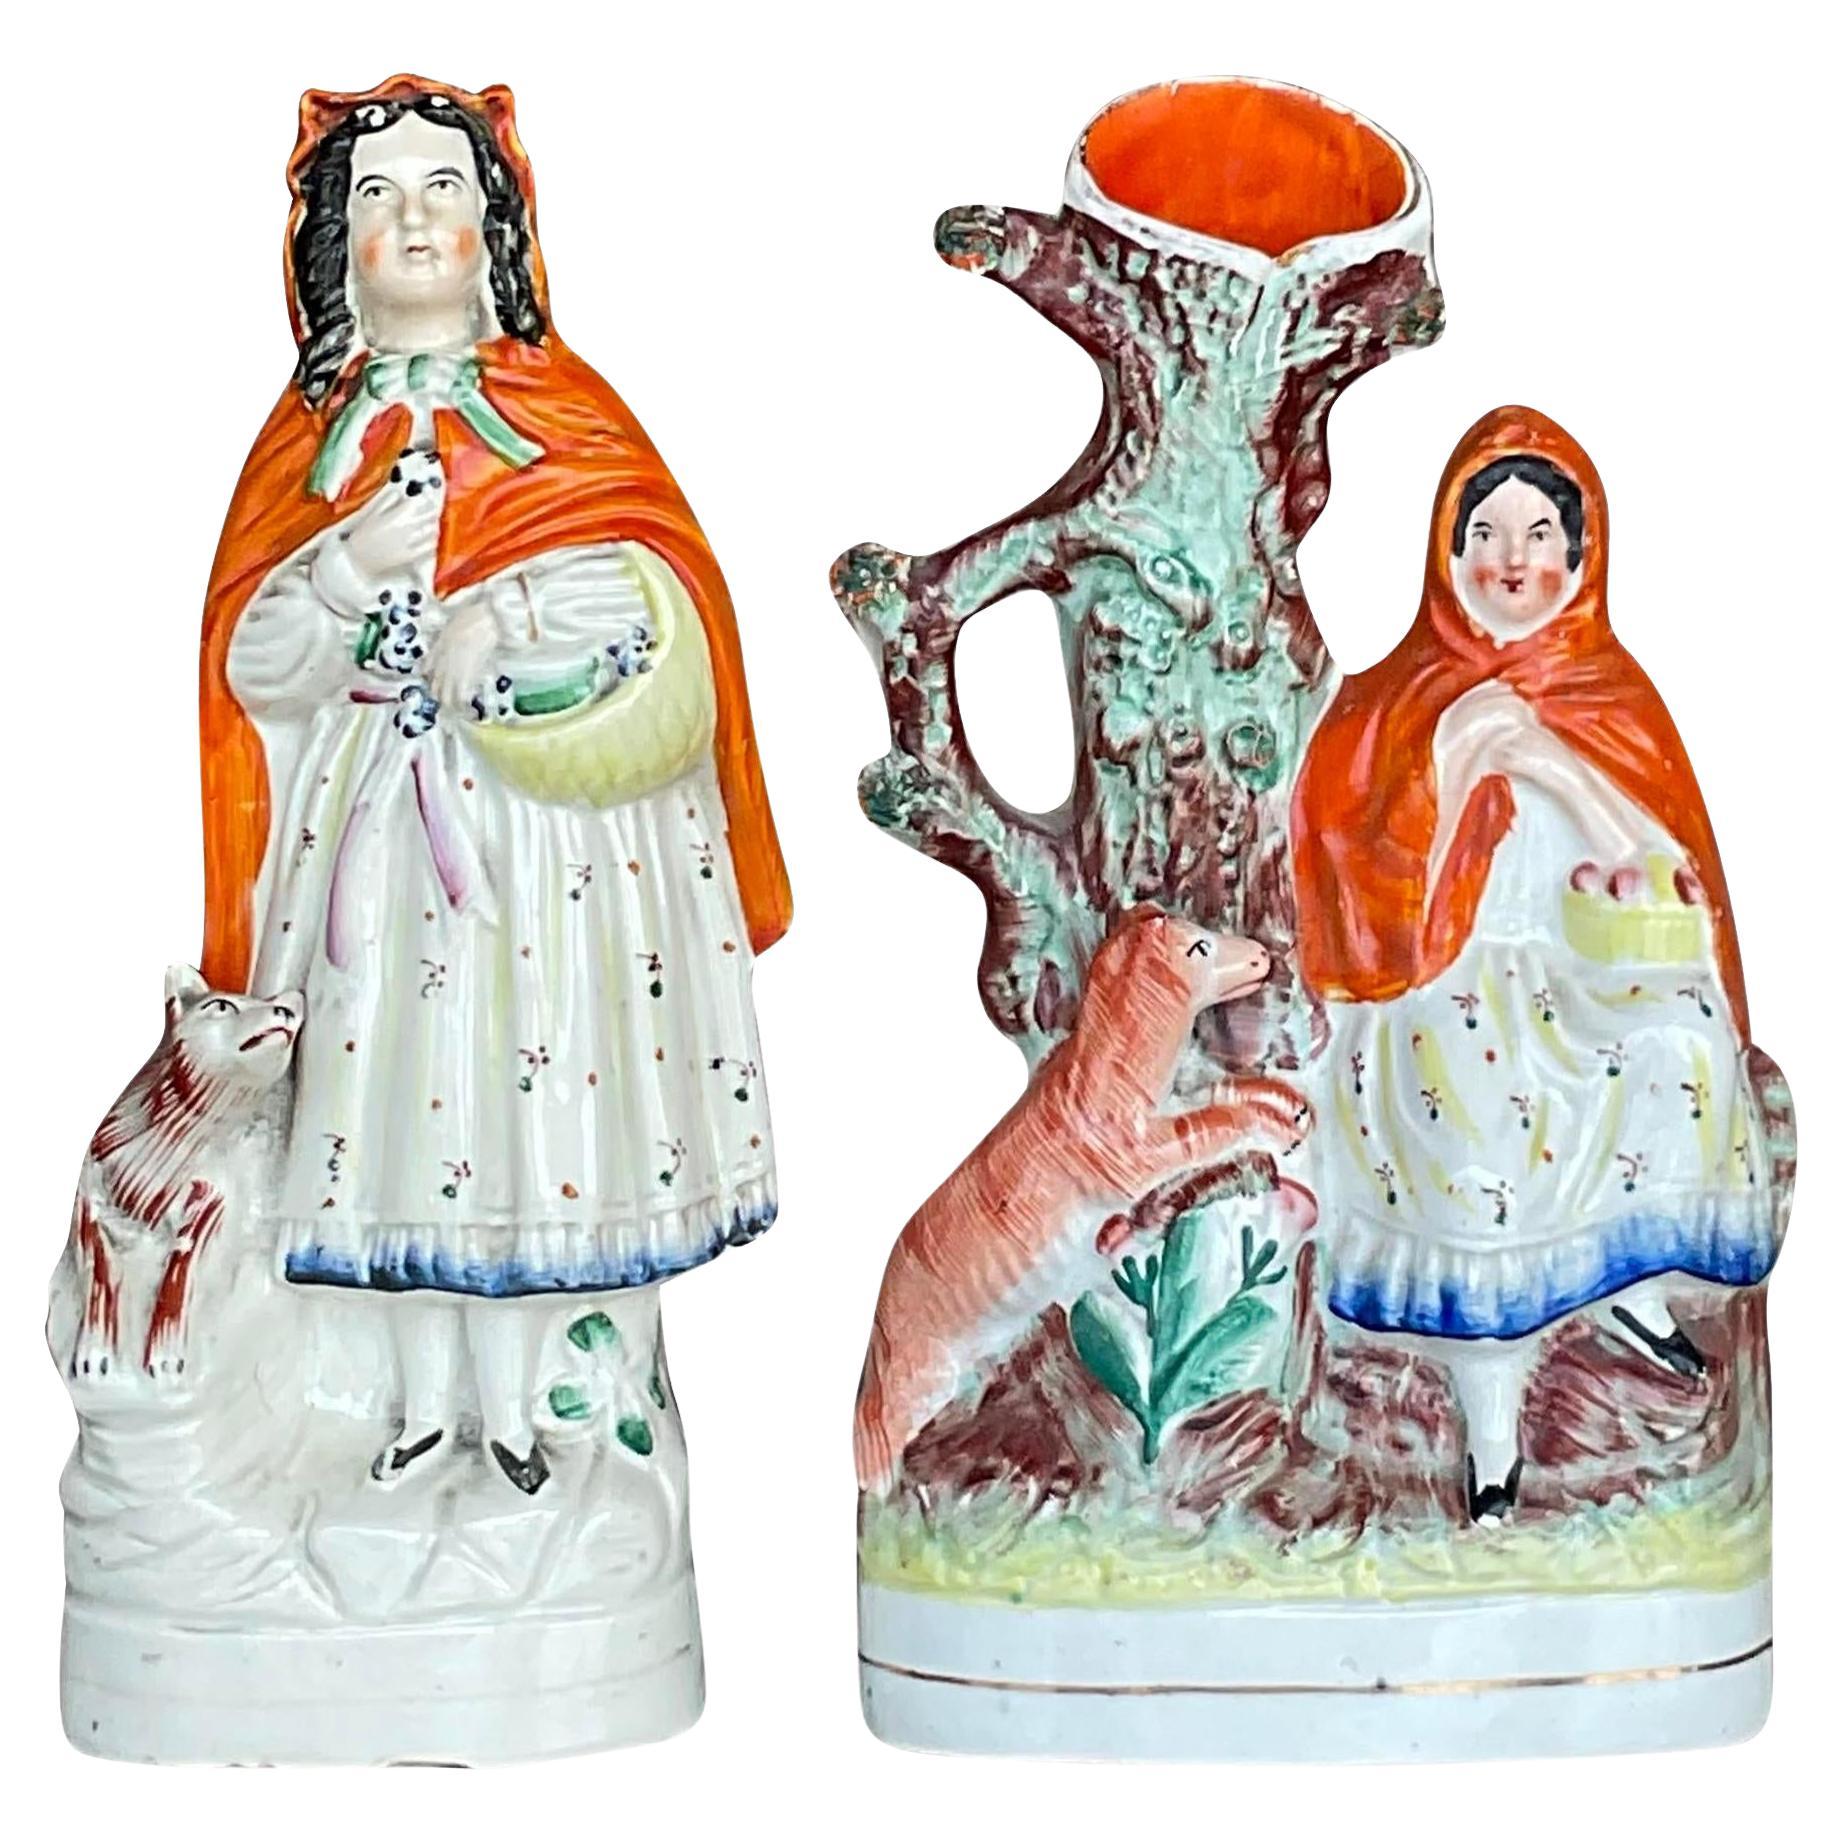 Vintage Regency Staffordshire Style Figurines - Set of 2 For Sale